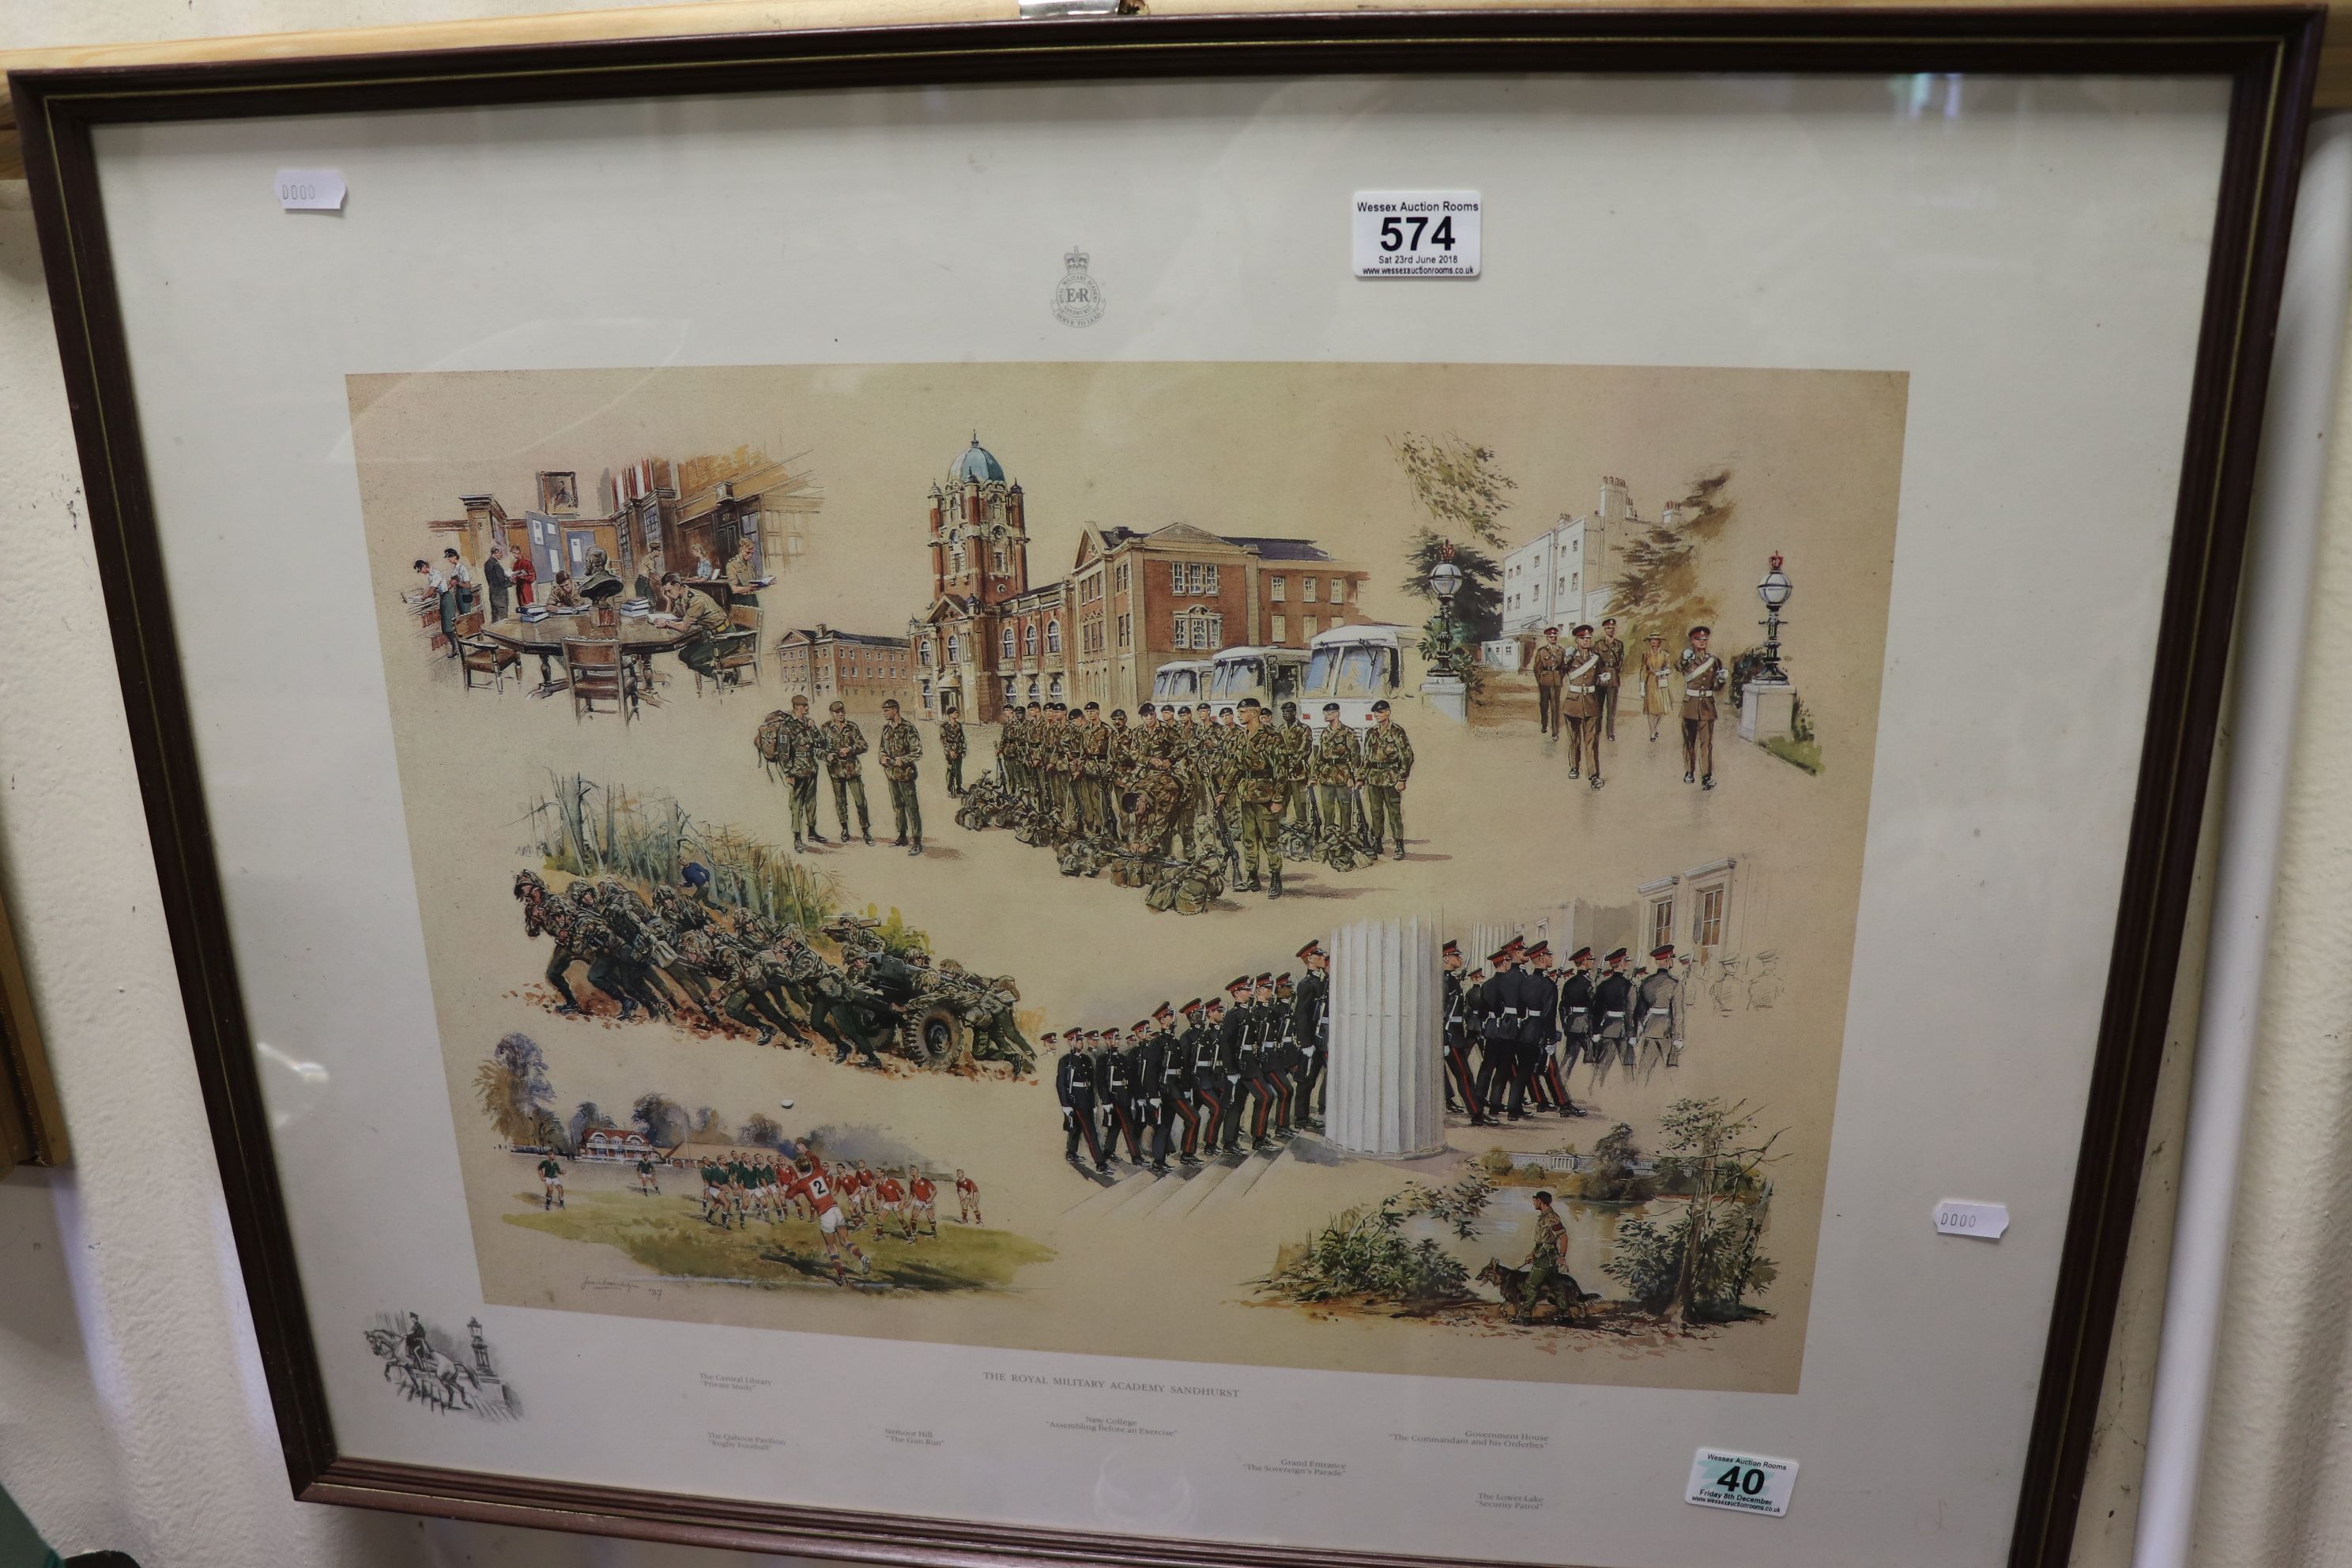 Framed and Glazed Montage Print of The Royal Military Academy Sandhurst